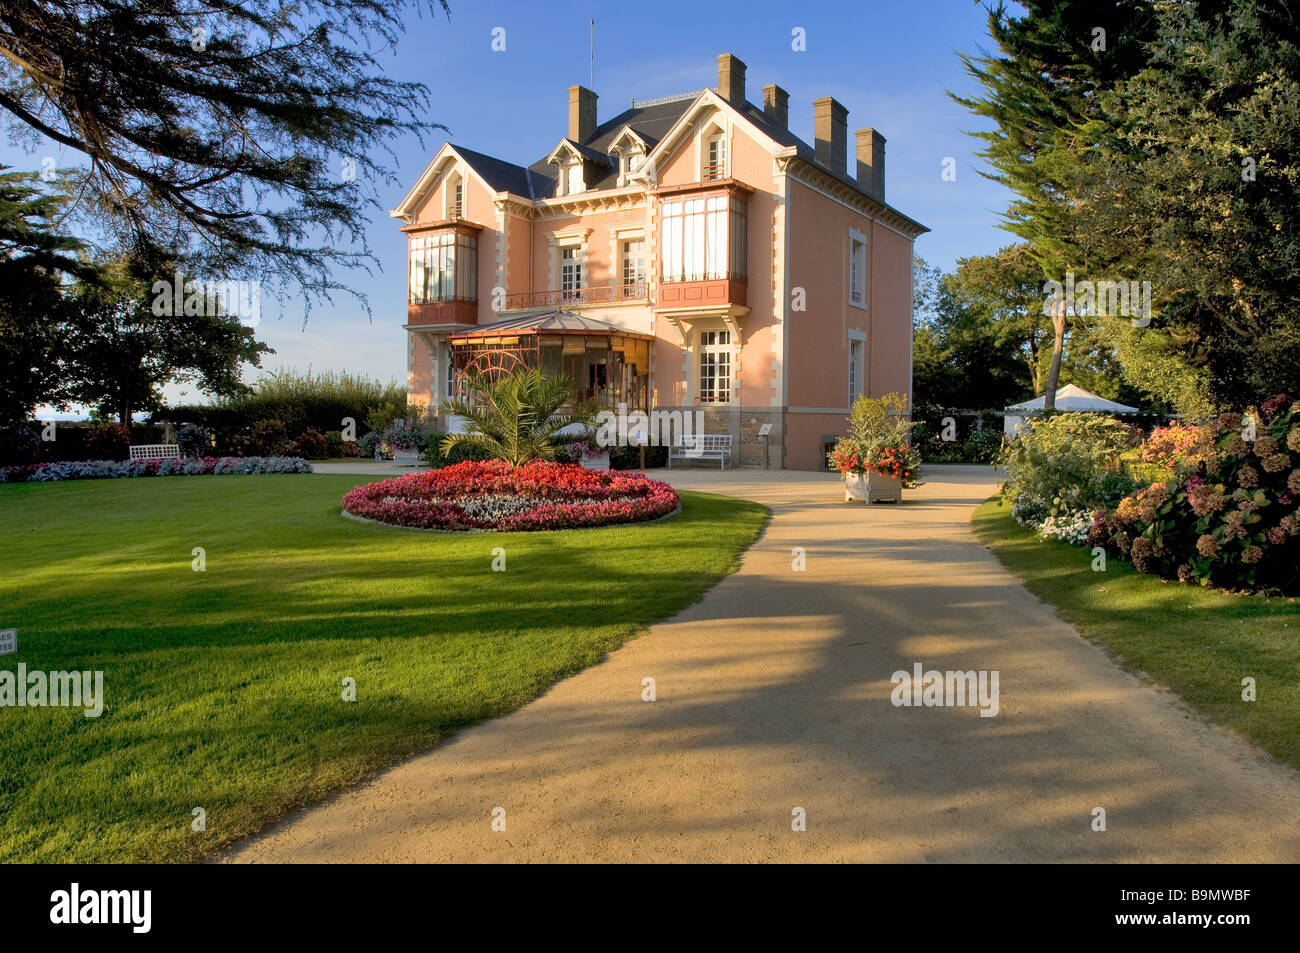 Bernard arnault house hi-res stock photography and images - Alamy